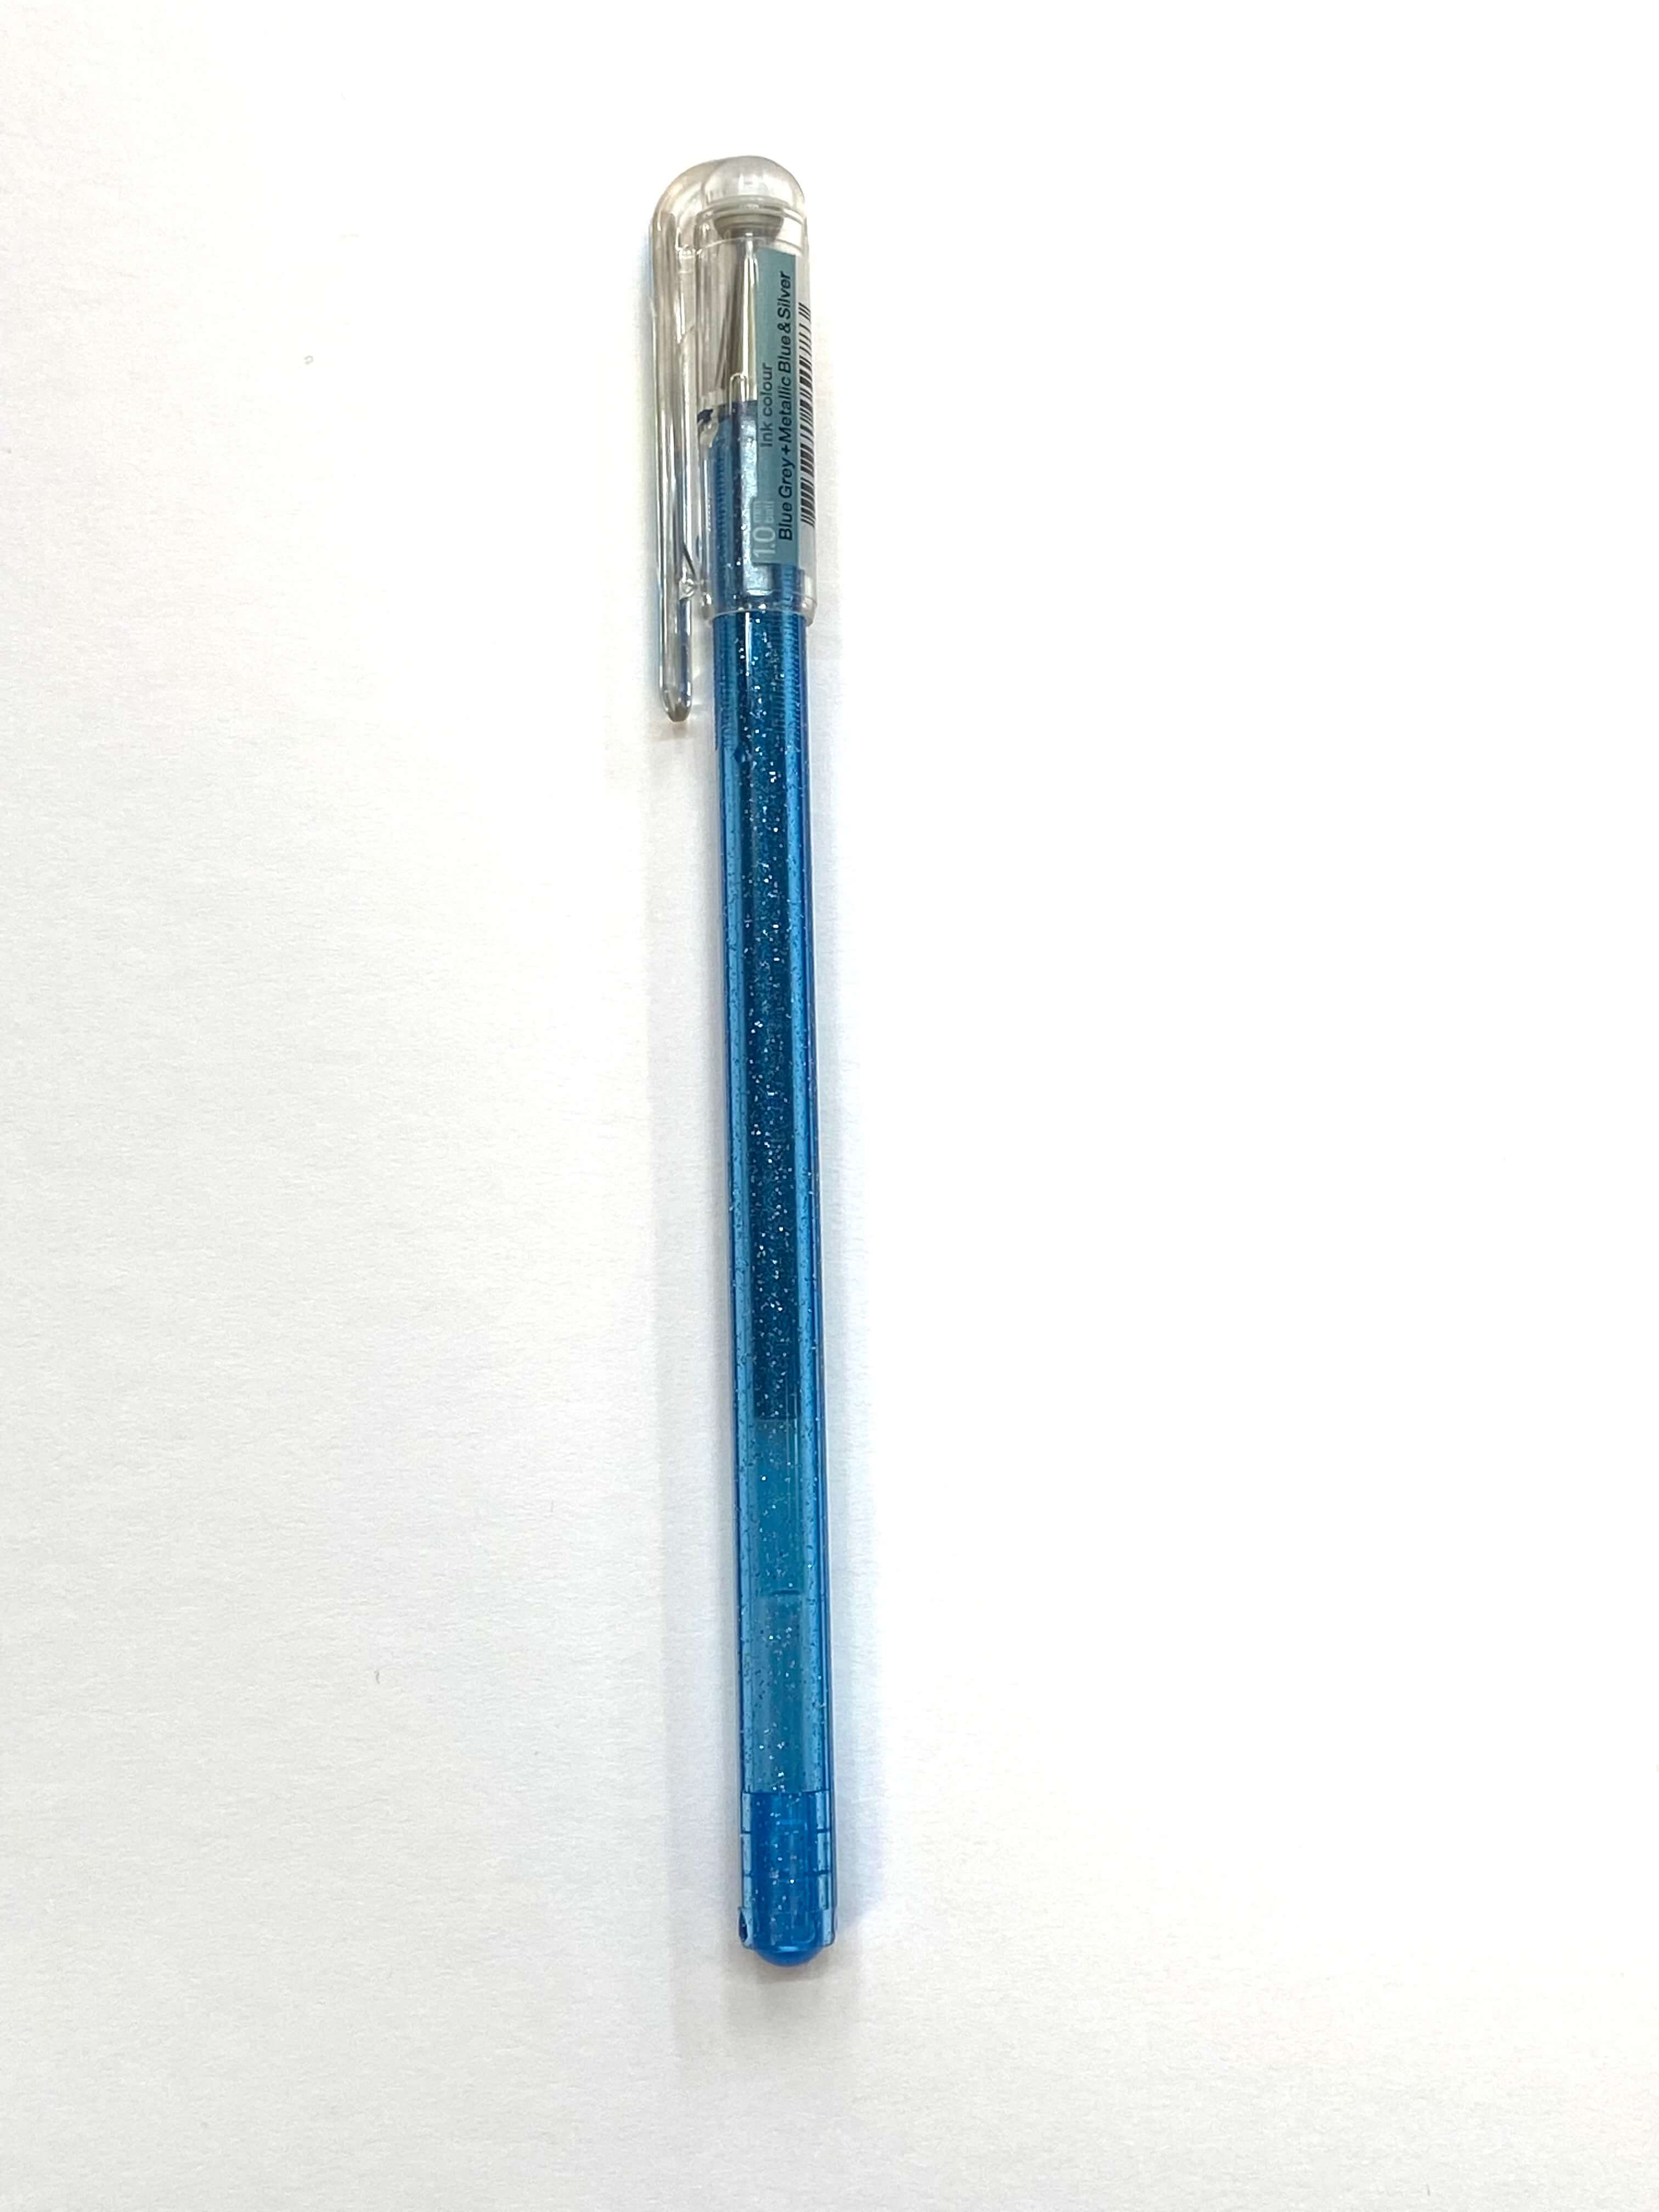 Pentel Dual metallic pen